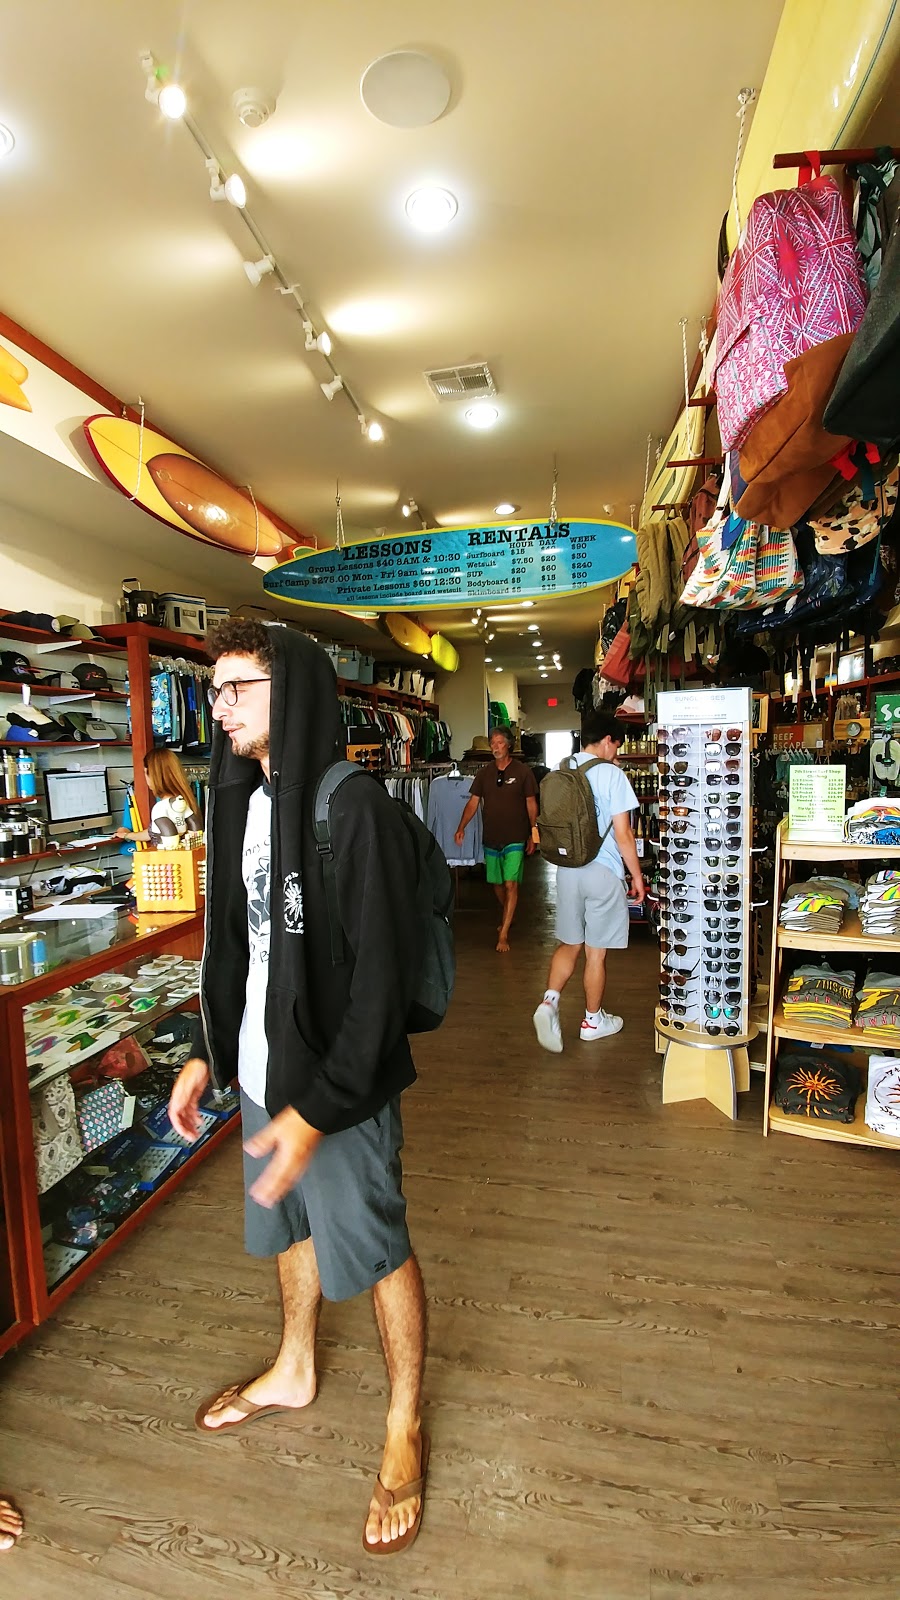 7th Street Surf Shop | 654 Boardwalk, Ocean City, NJ 08226 | Phone: (609) 391-1700